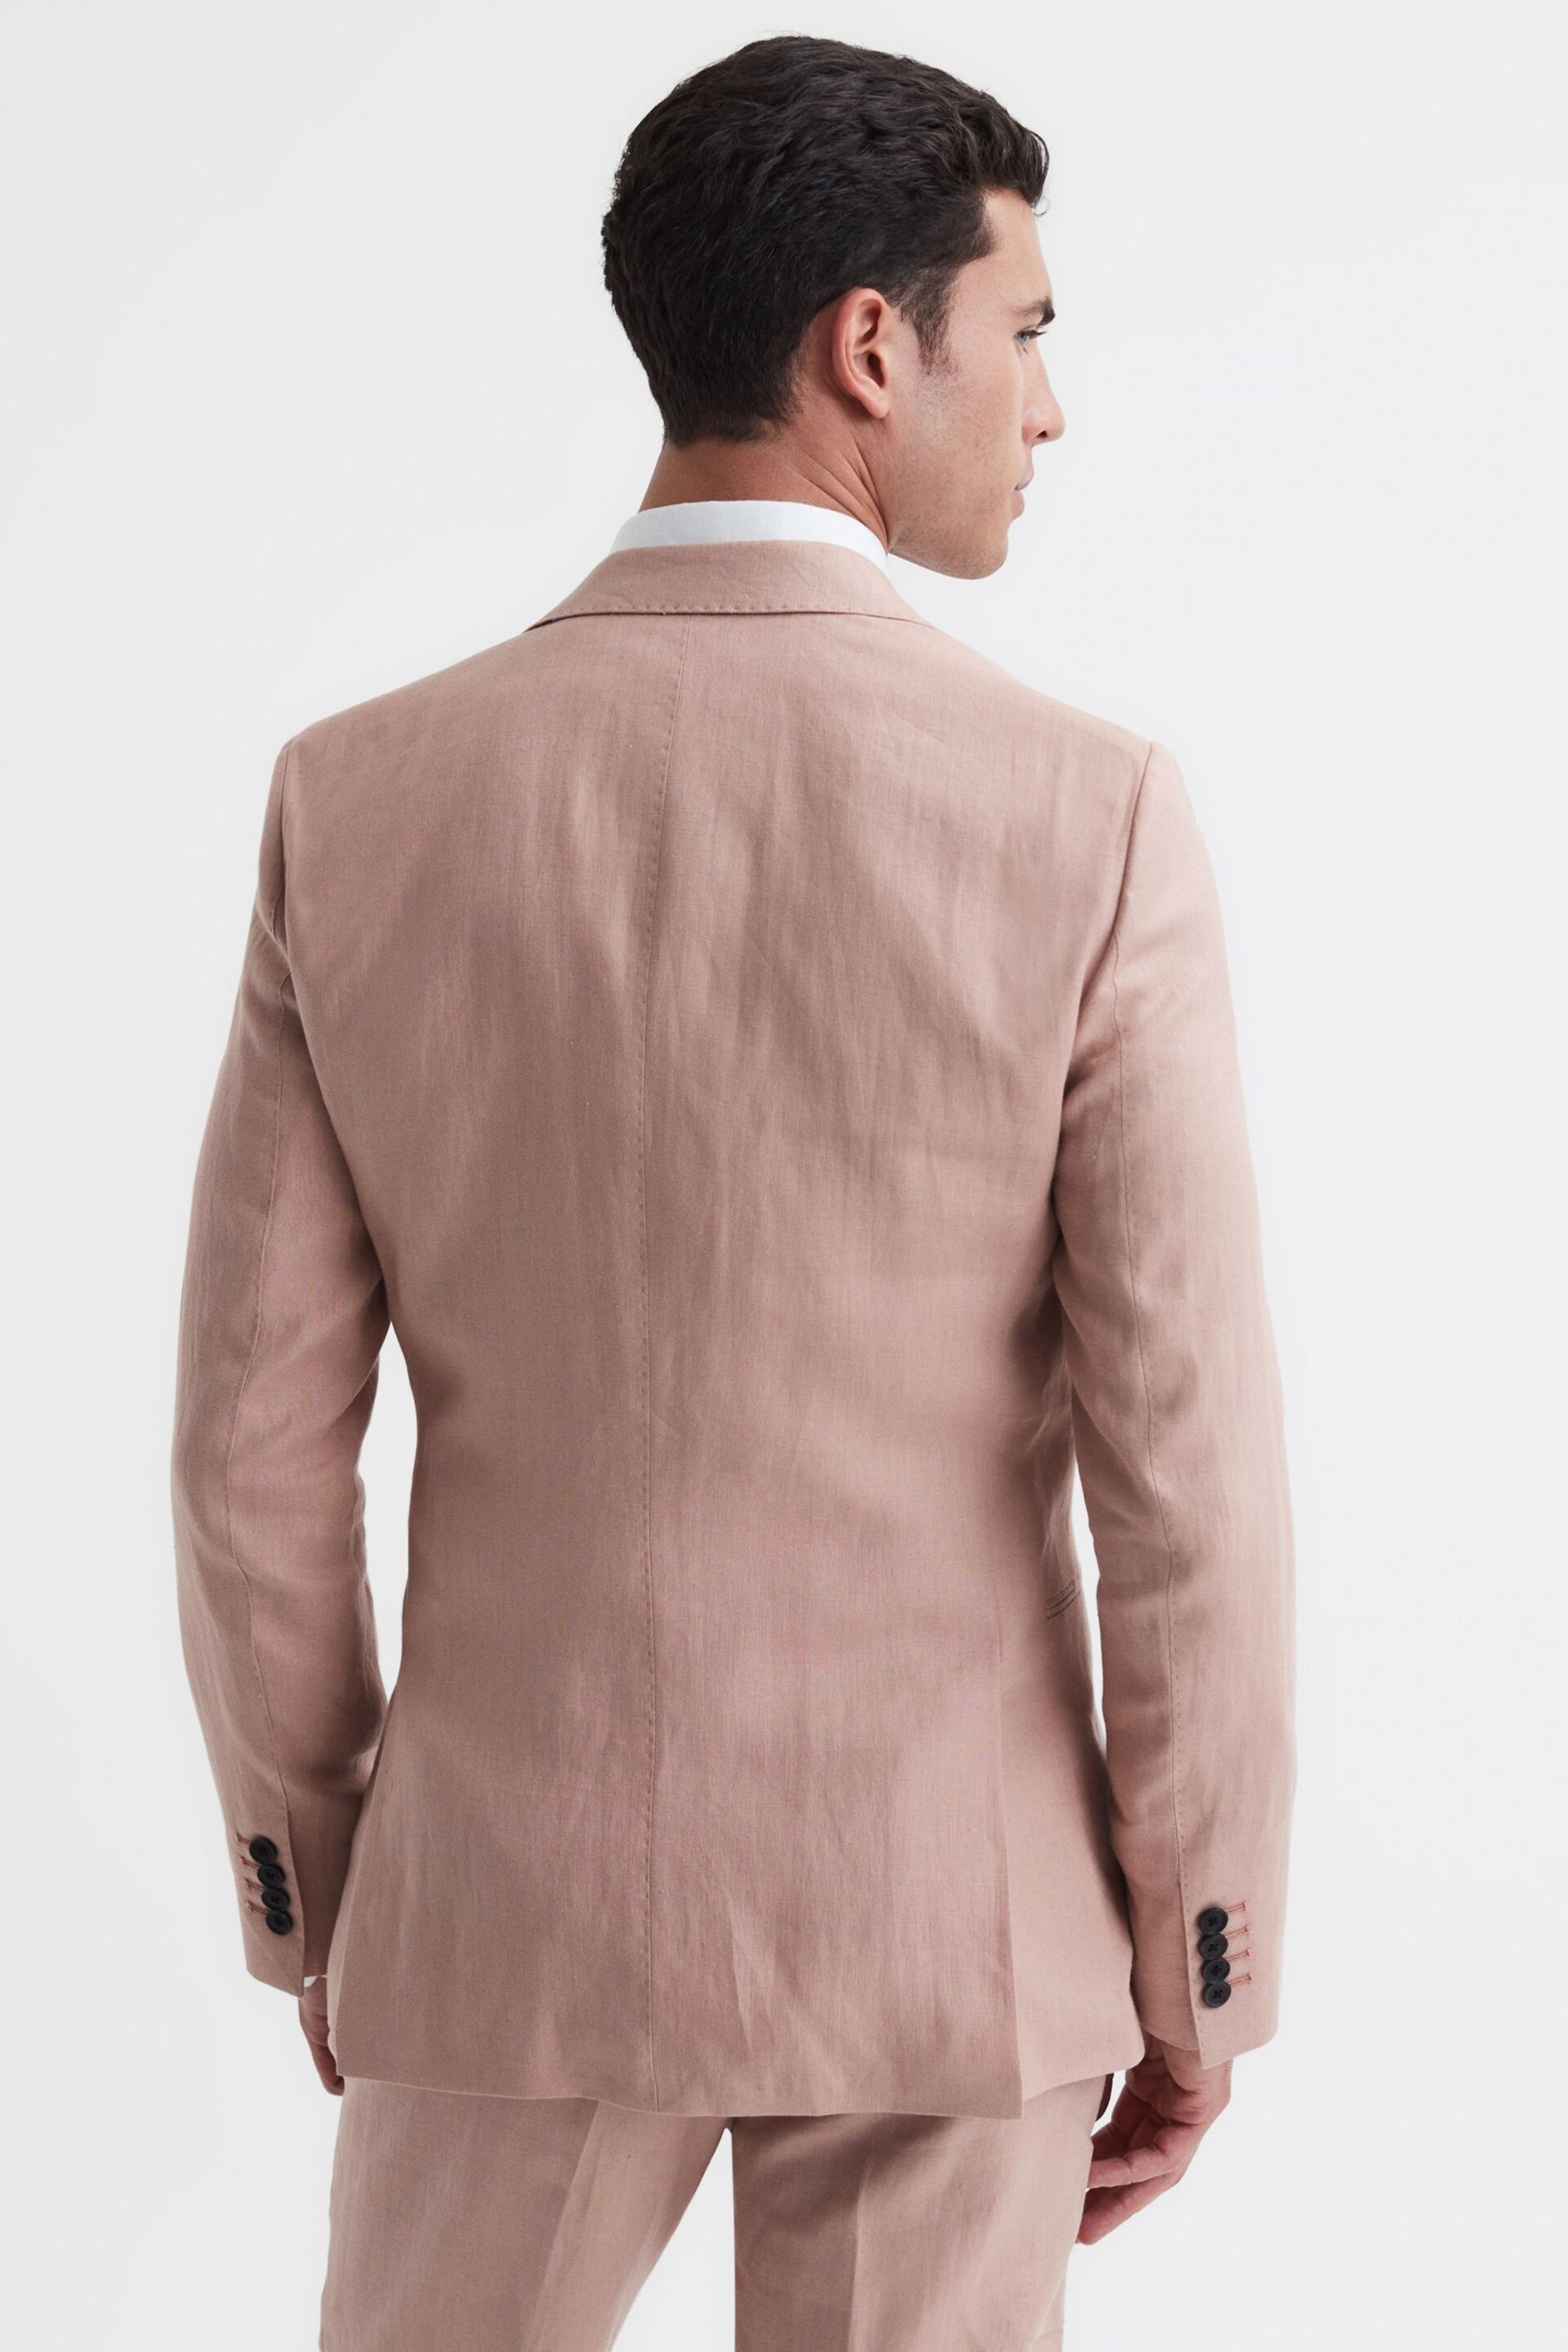 Reiss Blush Kin Slim Fit Single Breasted Linen Blazer - Image 4 of 7